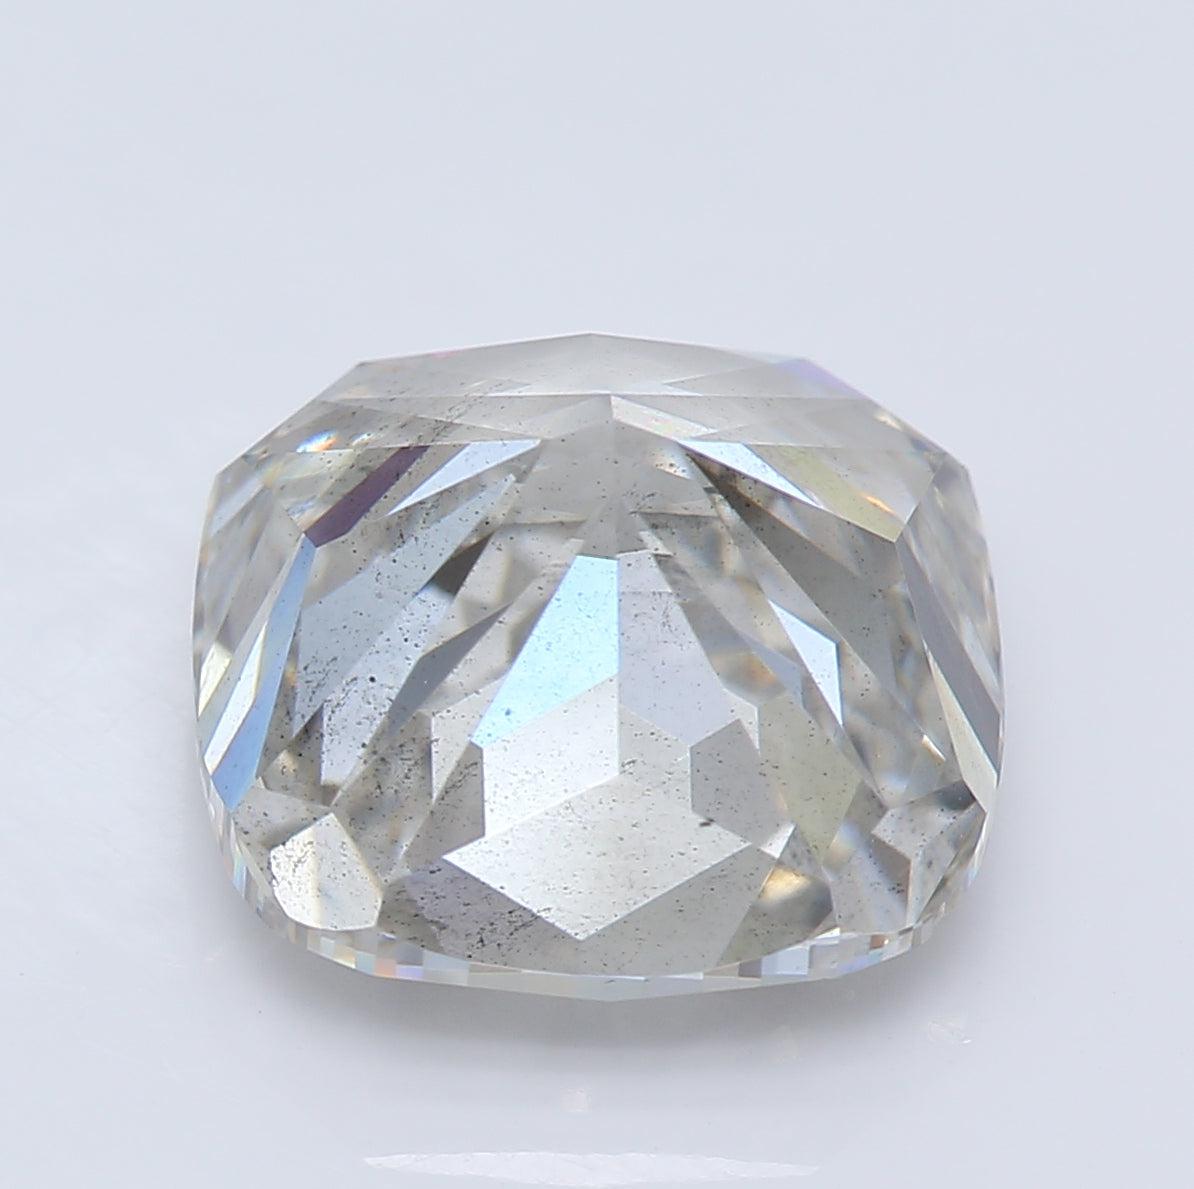 4.10 carat, Cushion Cut, H Color, SI1 clarity, Loose Lab Grown Diamond CVD